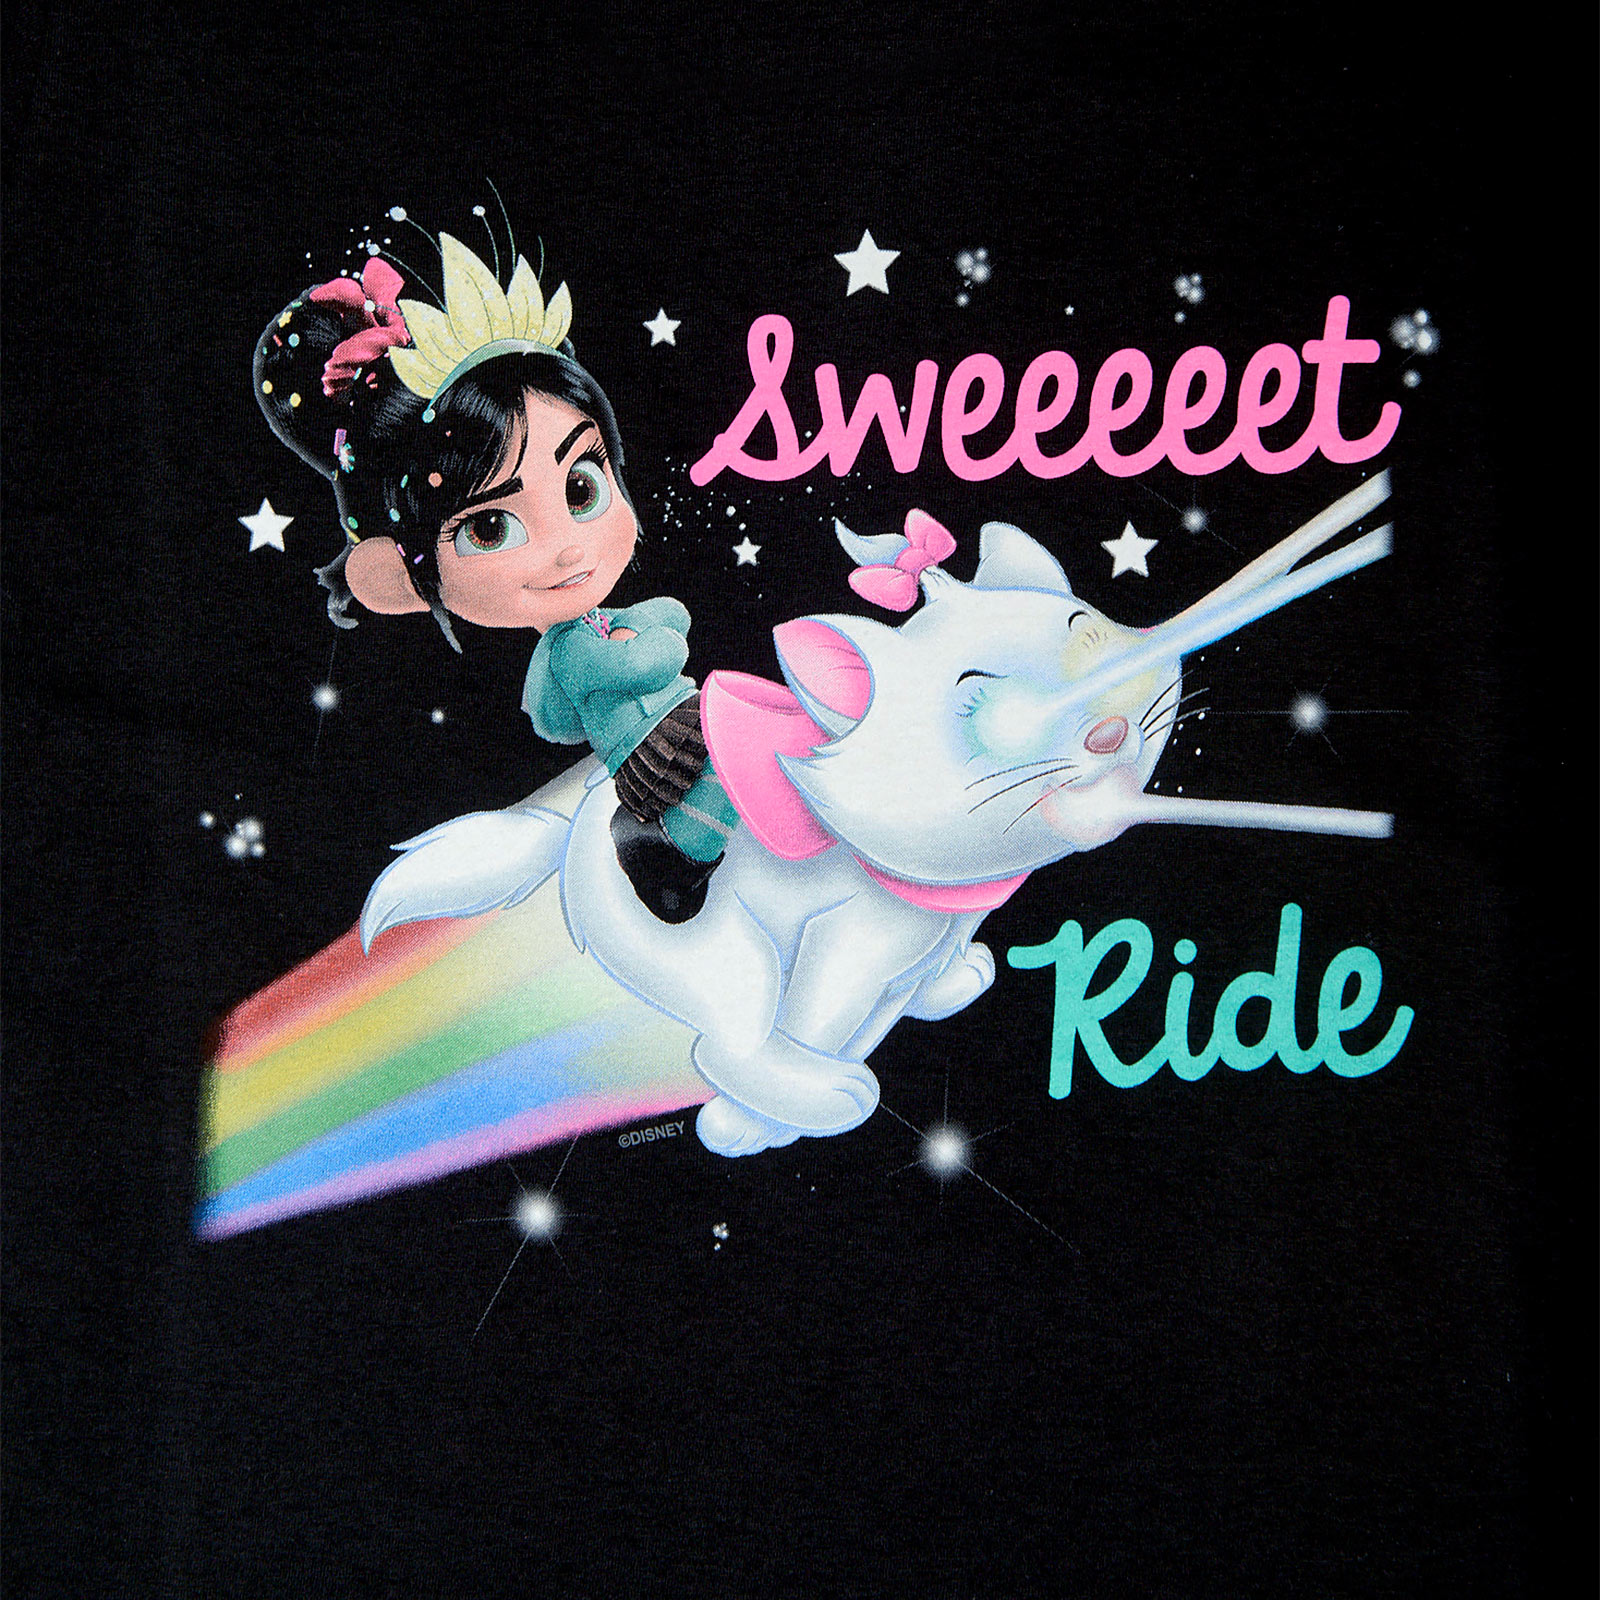 Ralph reichts - Vanellope Sweet Ride T-Shirt ladies black